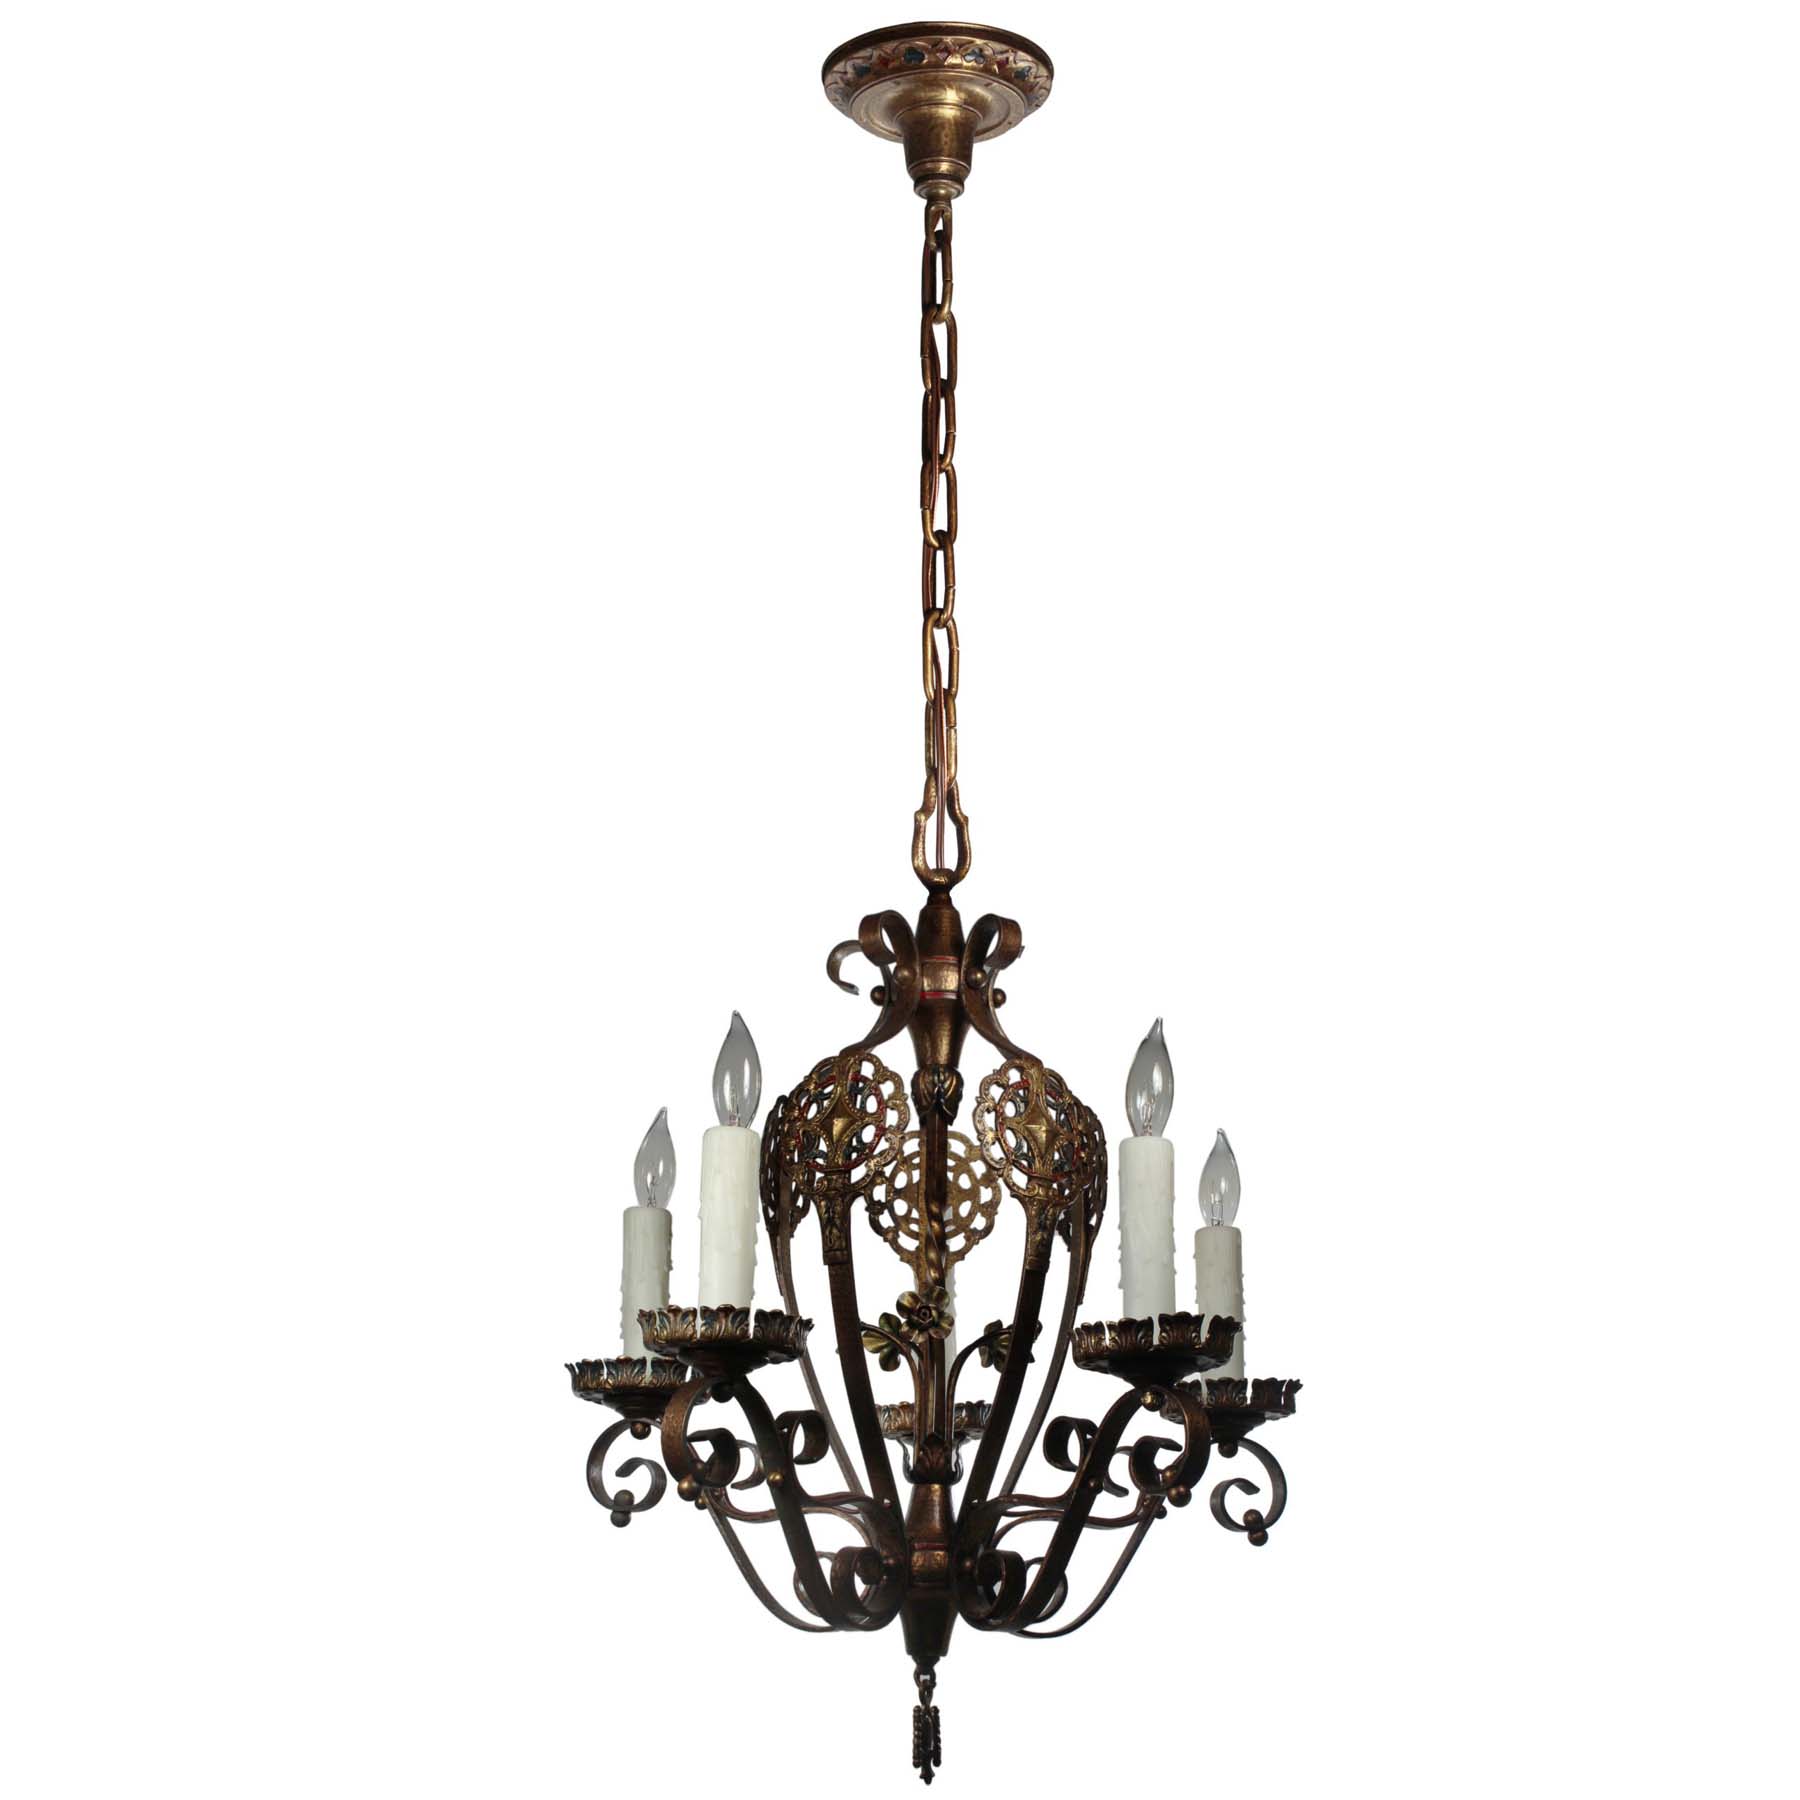 SOLD Antique Bronze Spanish Revival Five-Light Chandelier -69990